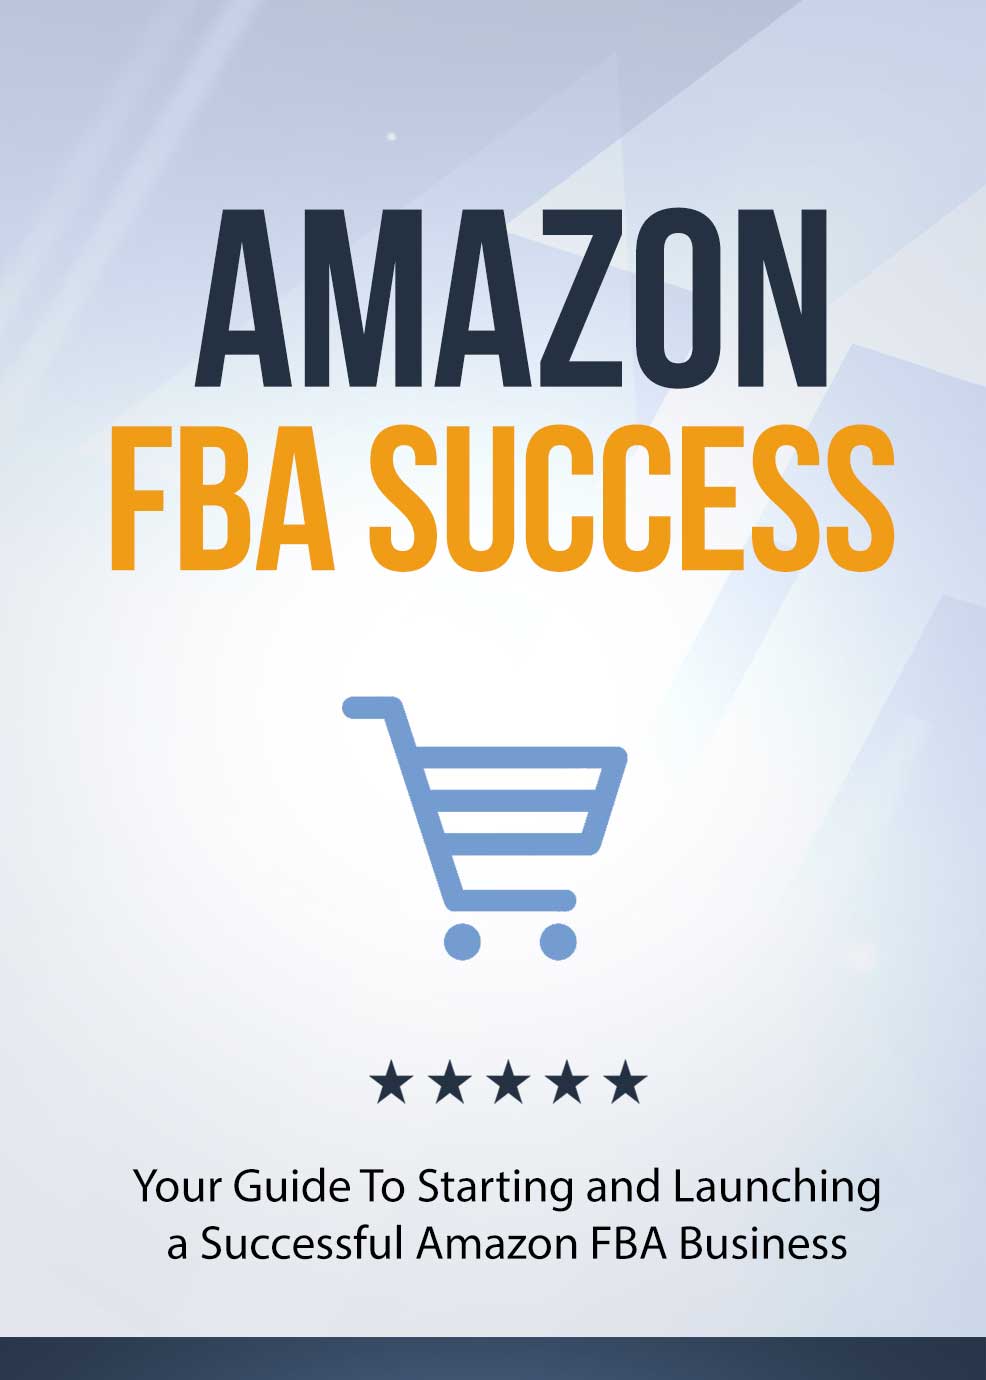 Amazon FBA Flat Cover